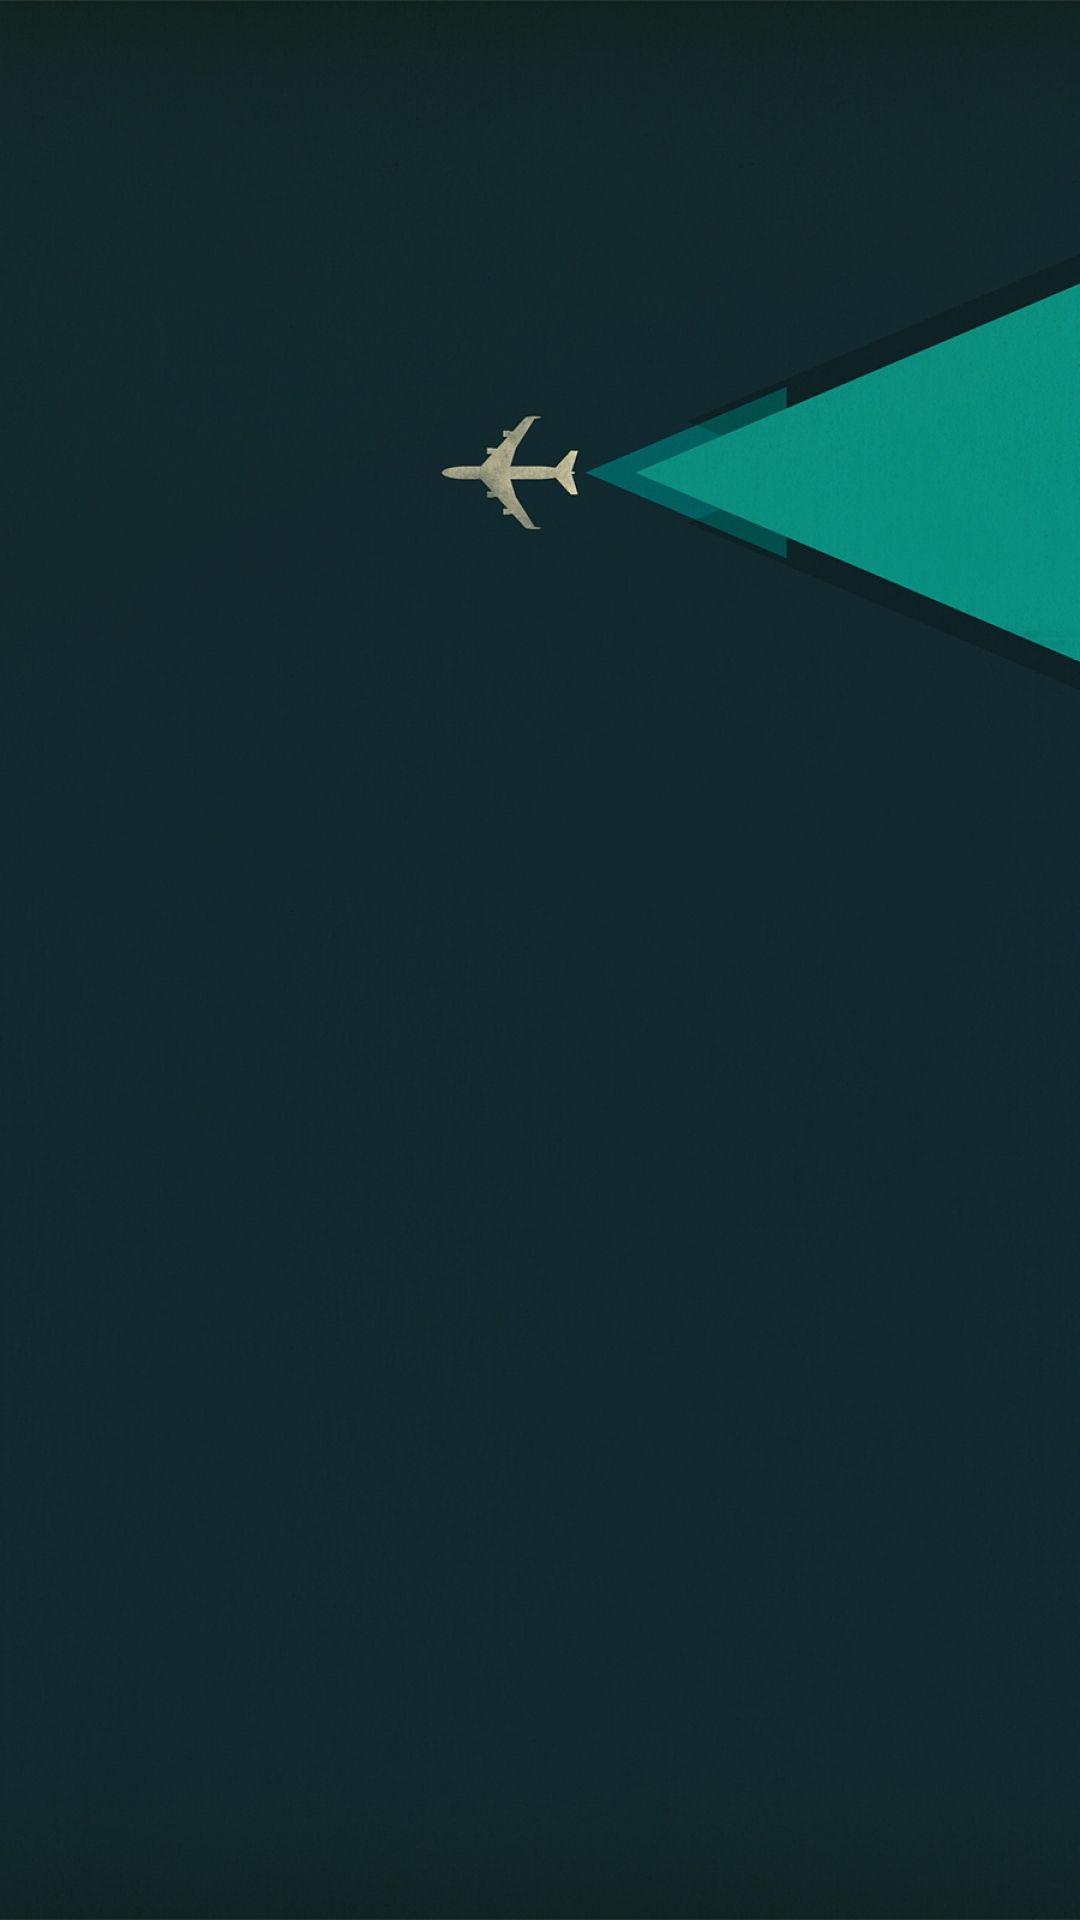 Wallpaper.wiki Minimalism Airplane IPhone Background PIC WPC002233